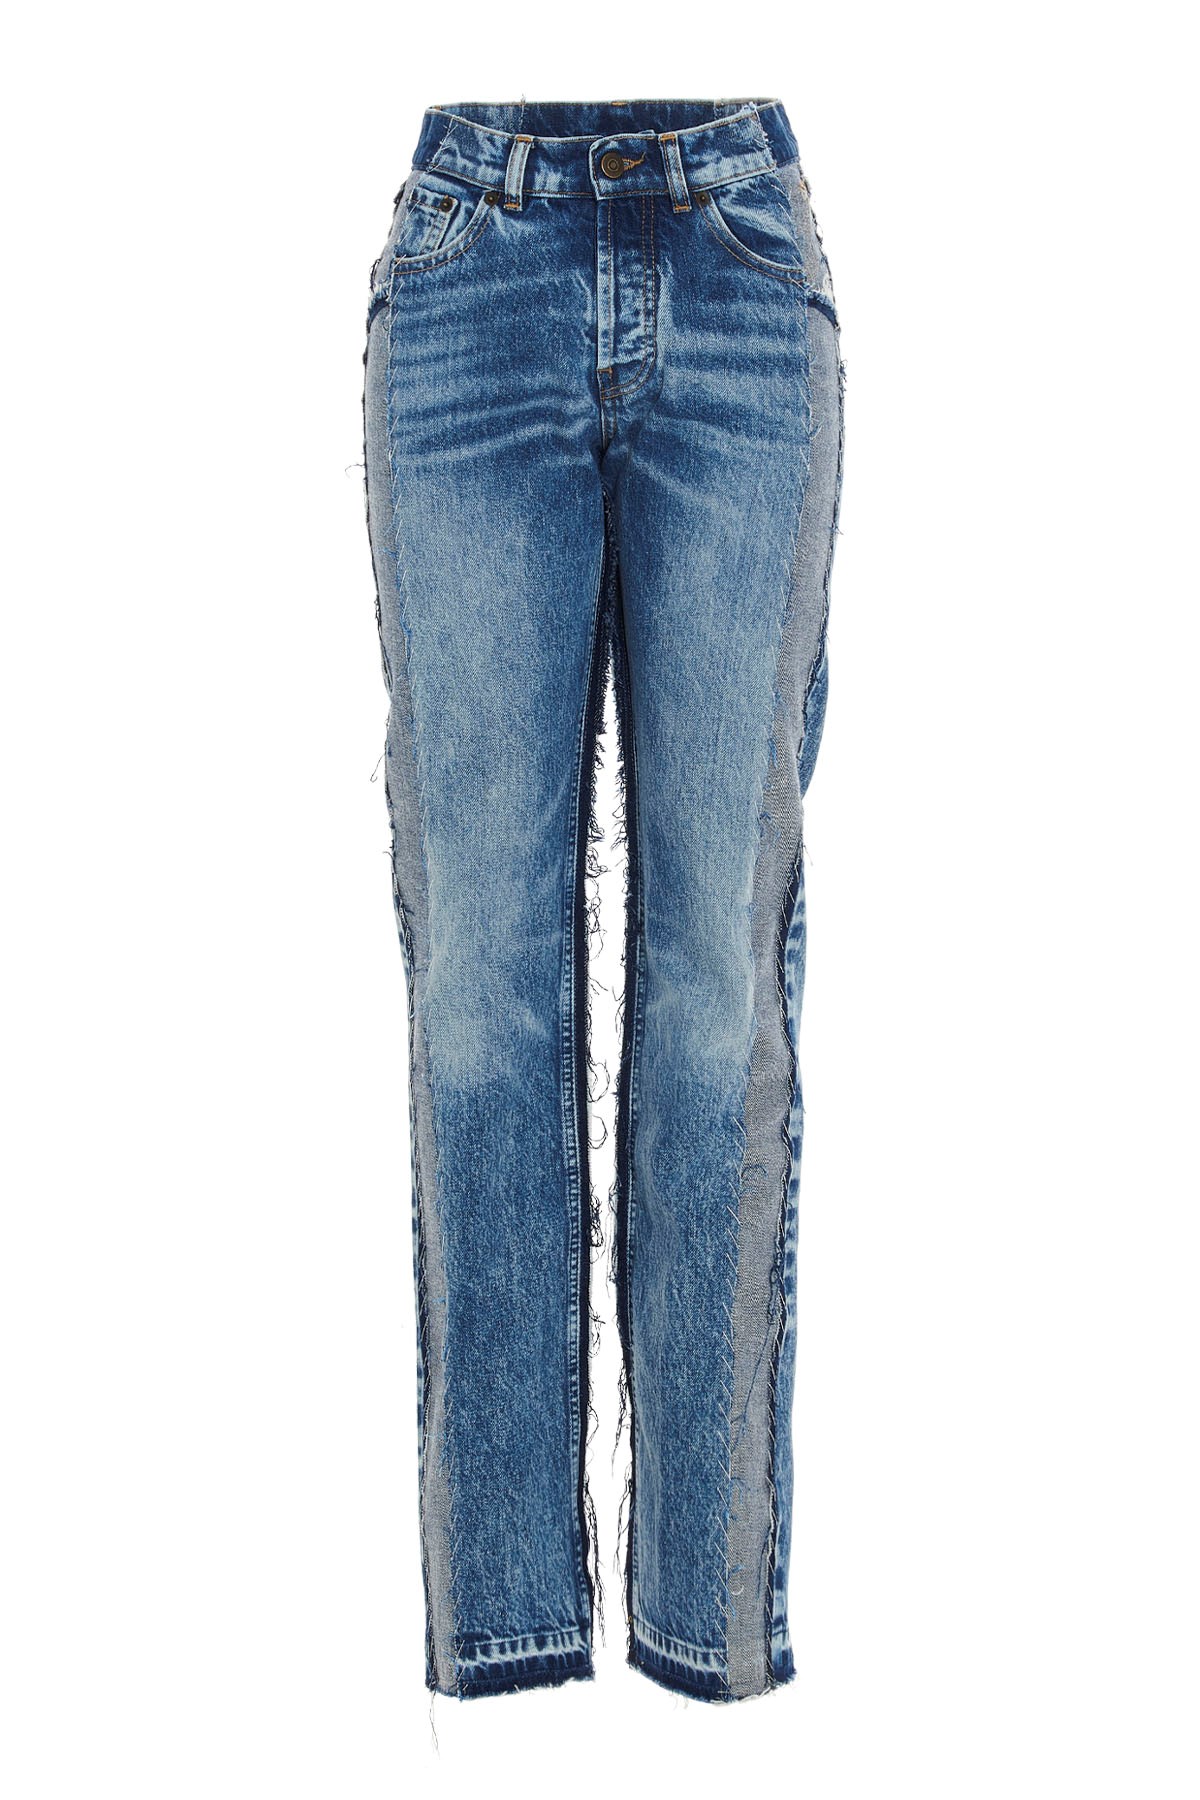 MAISON MARGIELA 'Recycled' Jeans